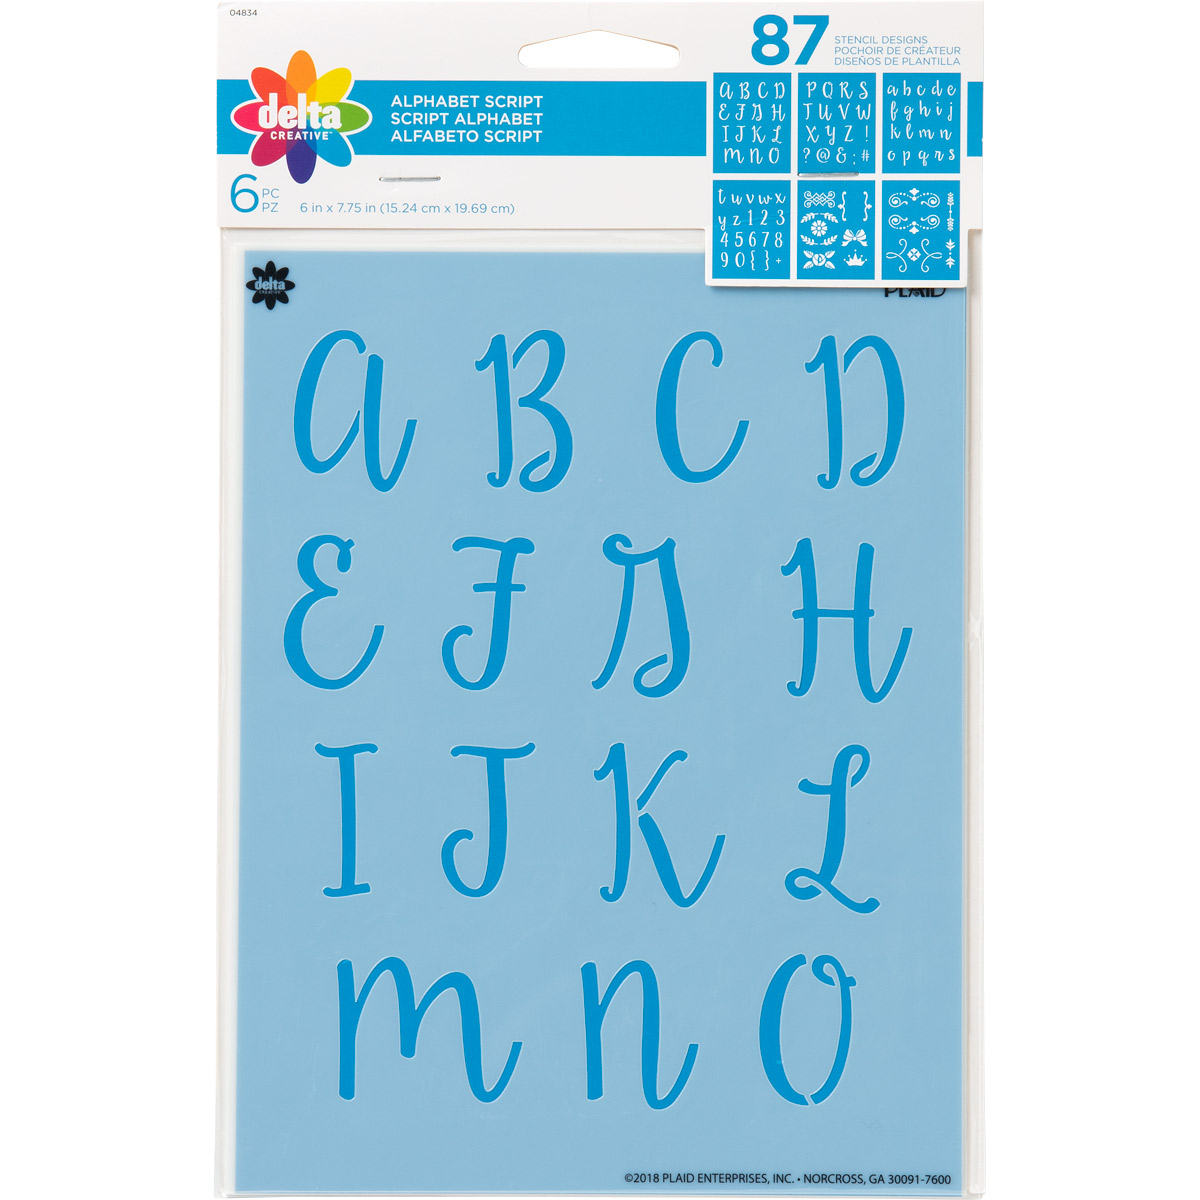 Delta Creative™ Stencil - Alphabet Script - 04834